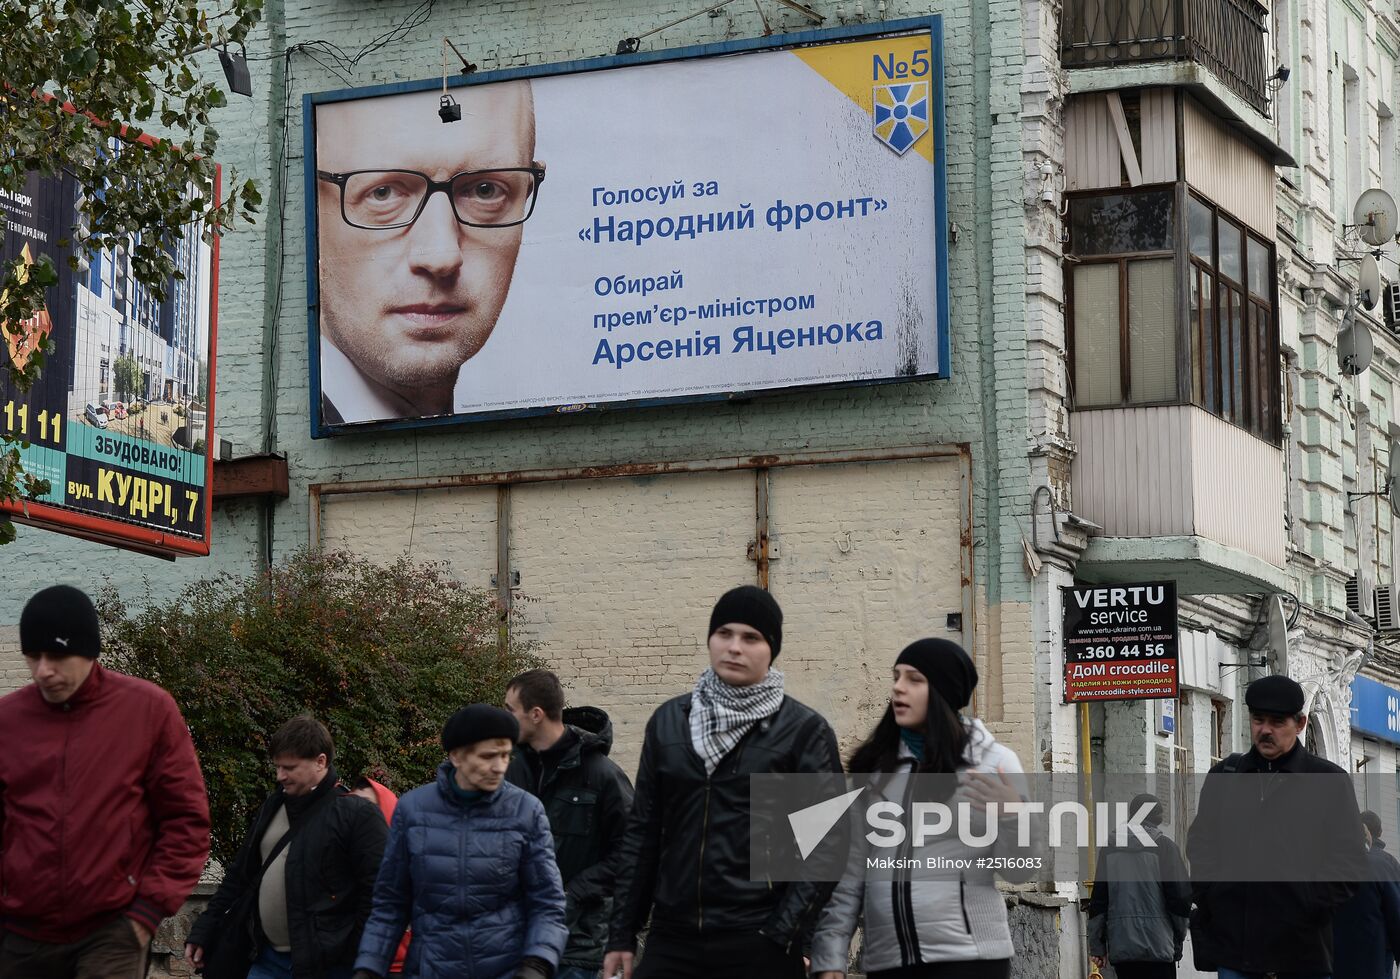 Election campaign in Kiev